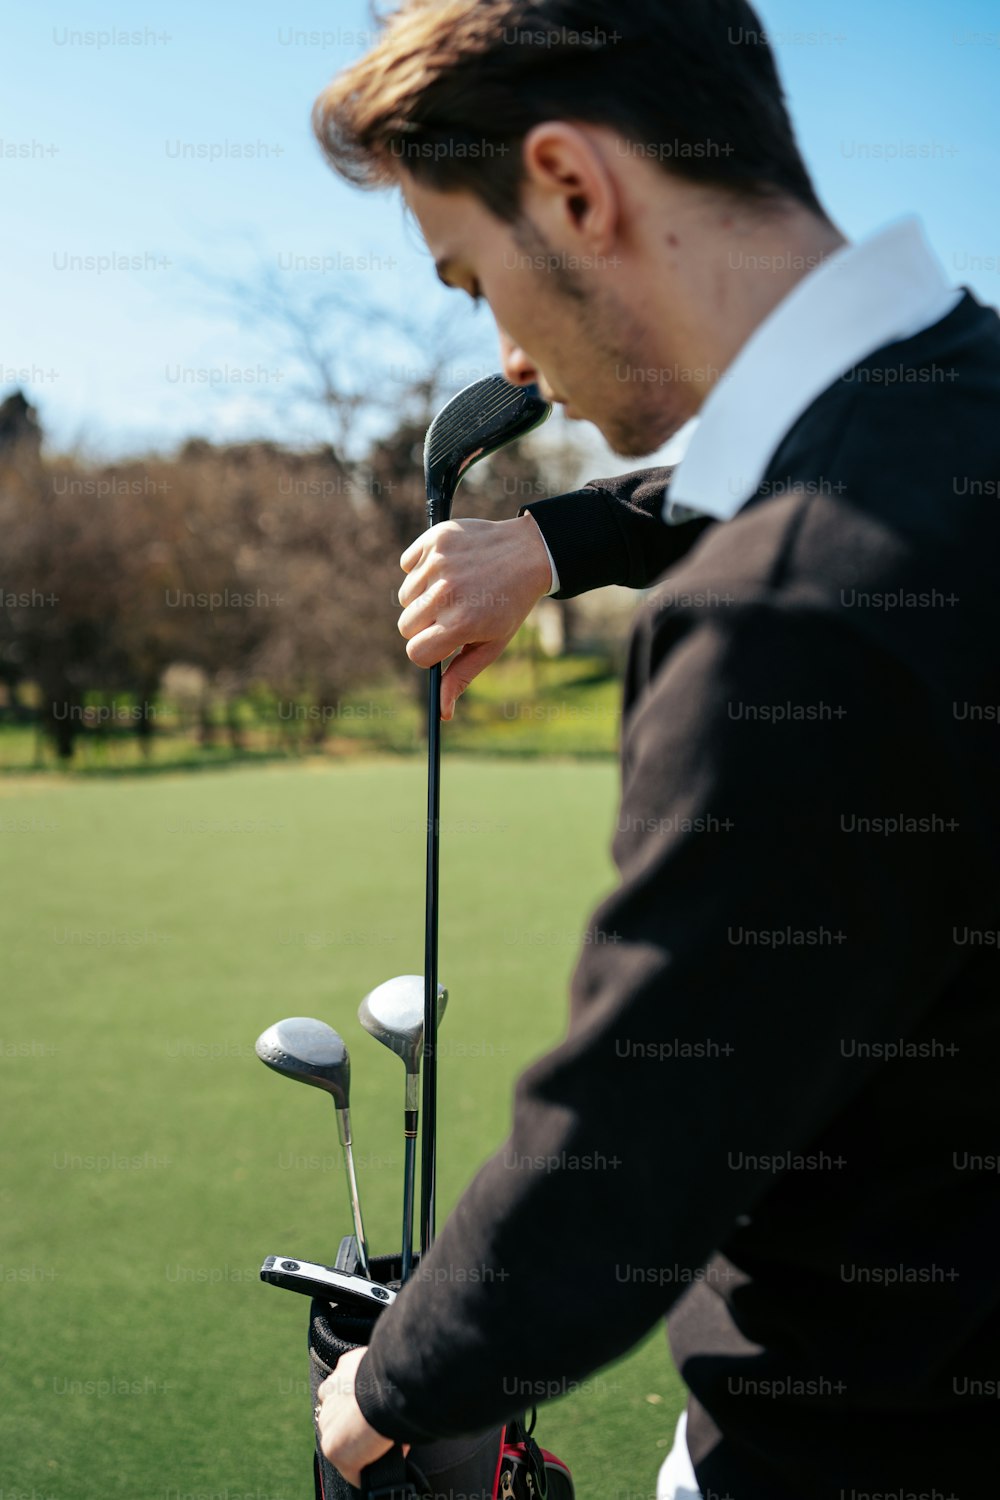 a man holding a golf club on a golf course